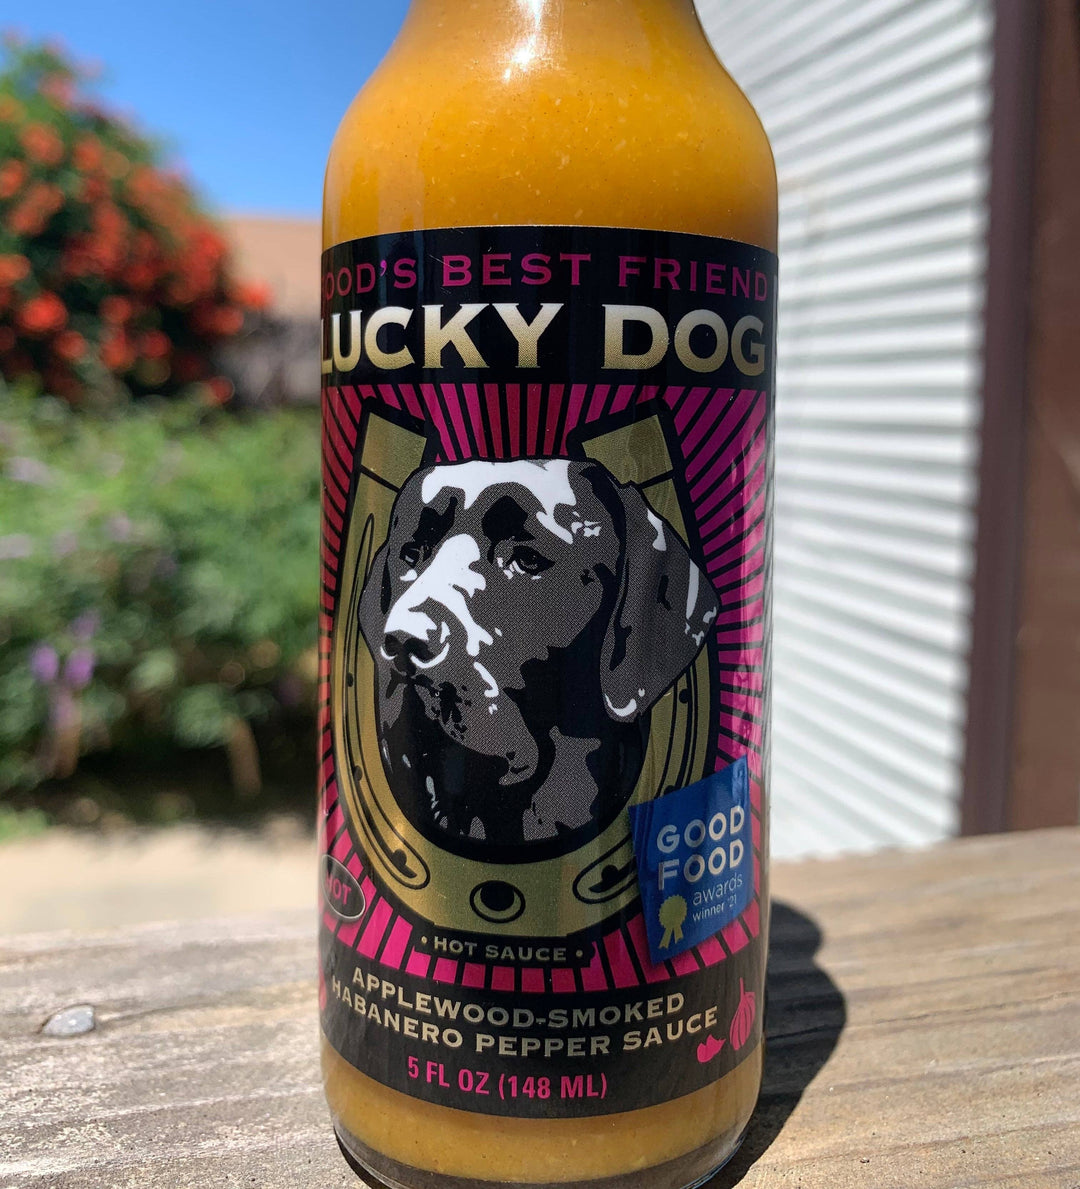 Lucky Dog Pink Label Applewood Smoked Habanero Pepper Sauce